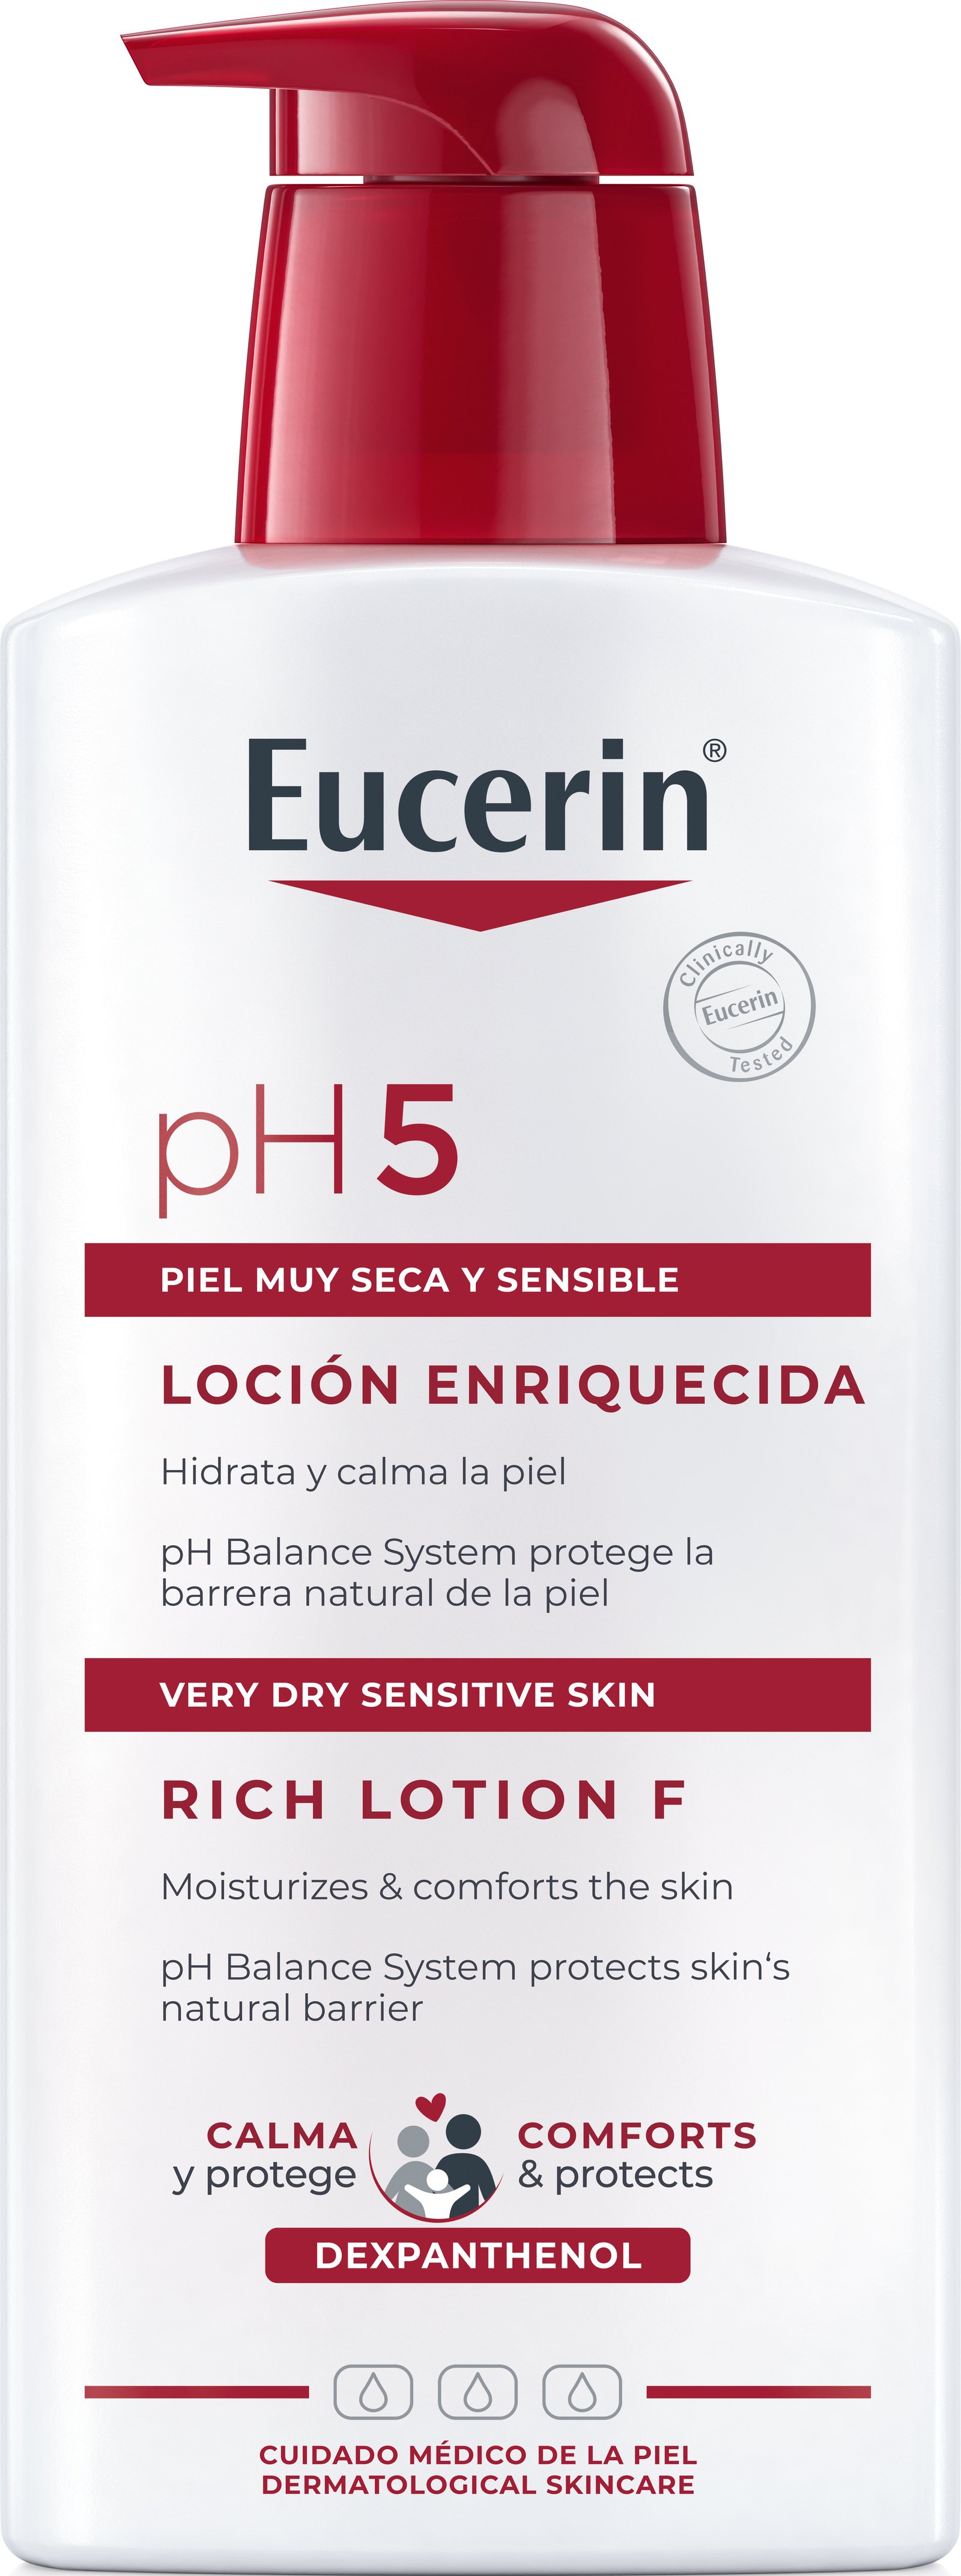 Eucerin pH5 Rich Lotion F 400 ml